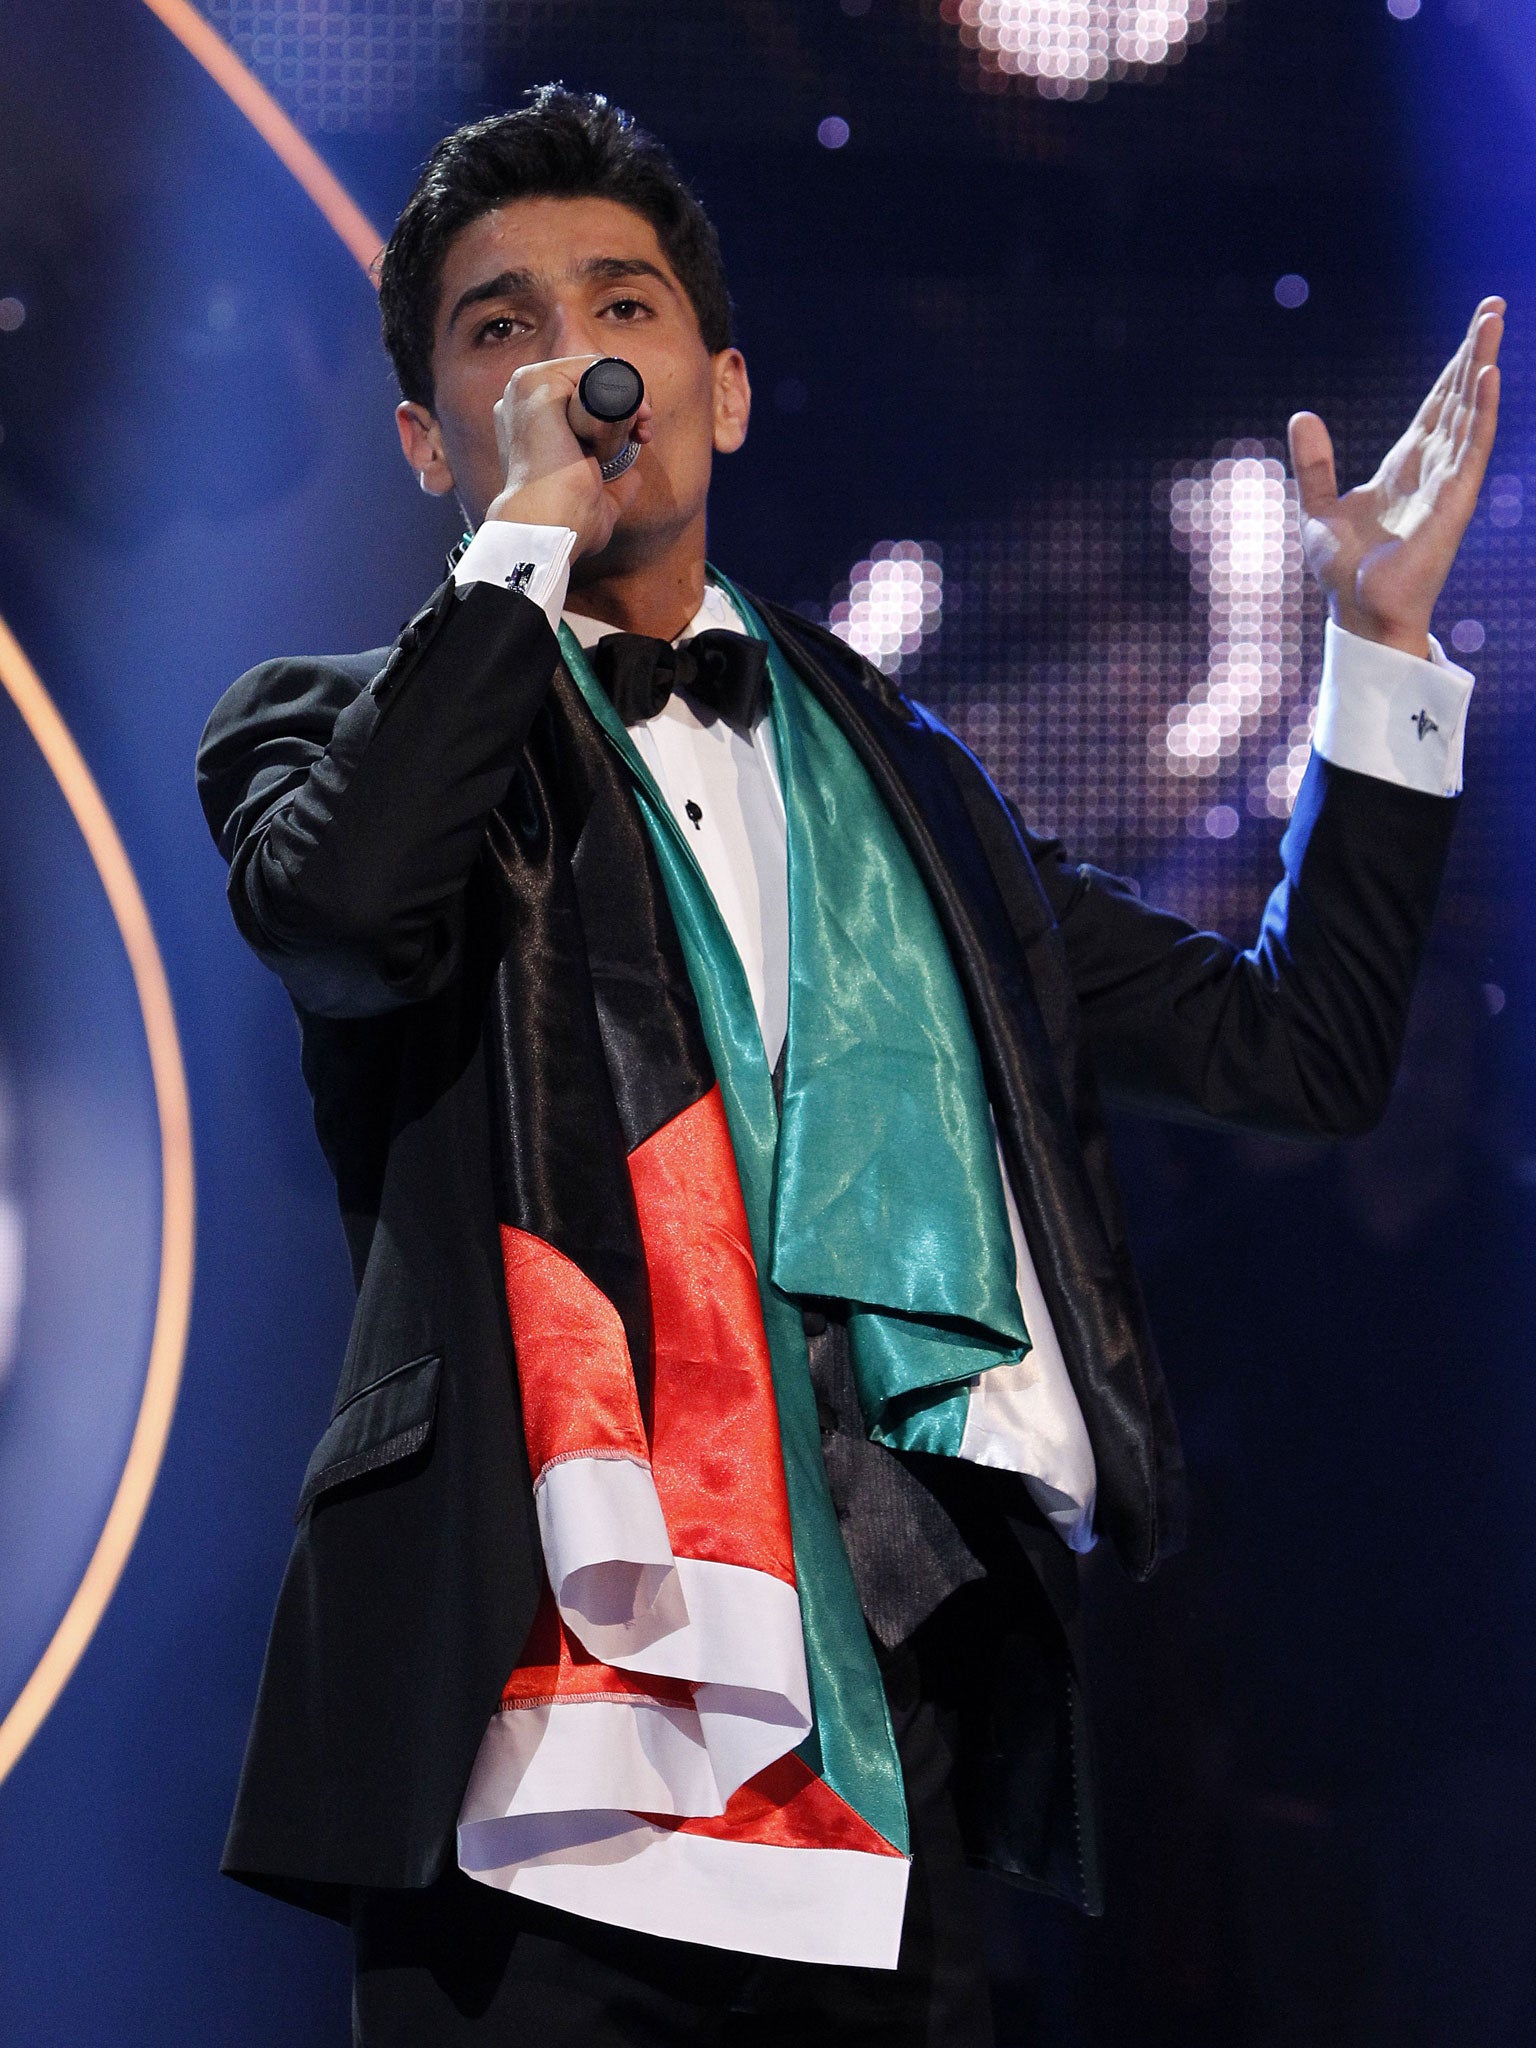 Mohammed Assaf has won the Arab Idol TV talent contest